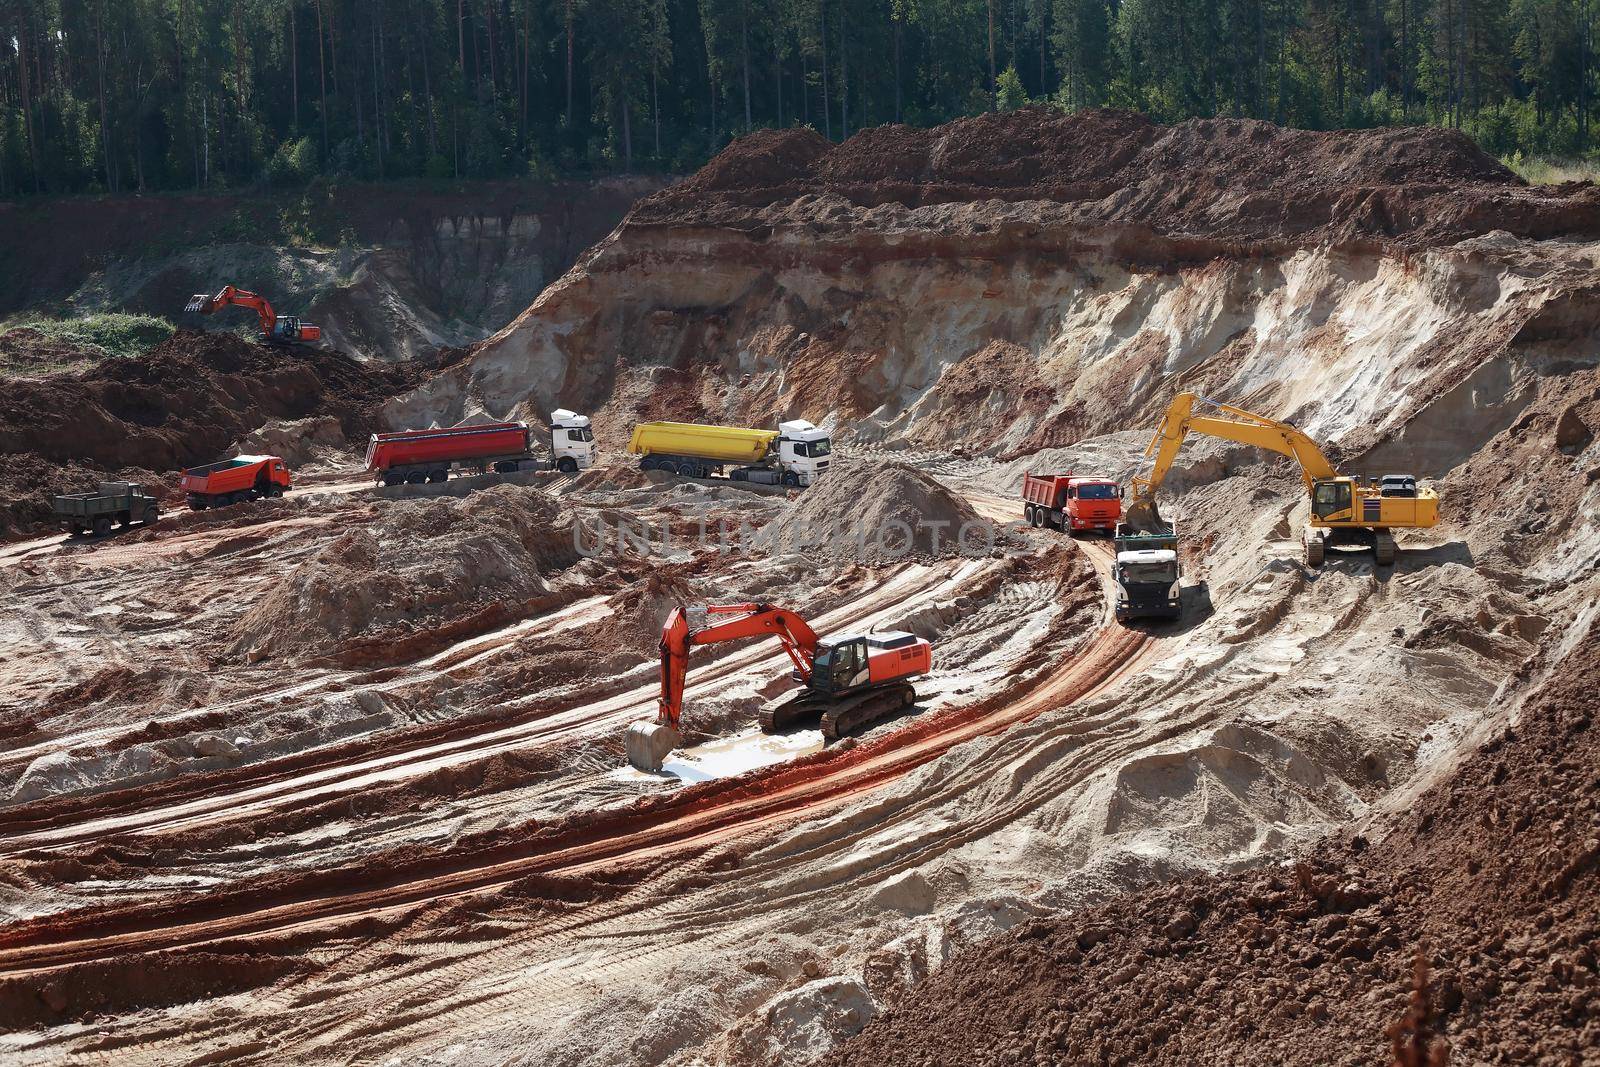 Sand Mining In A Quarry by kvkirillov